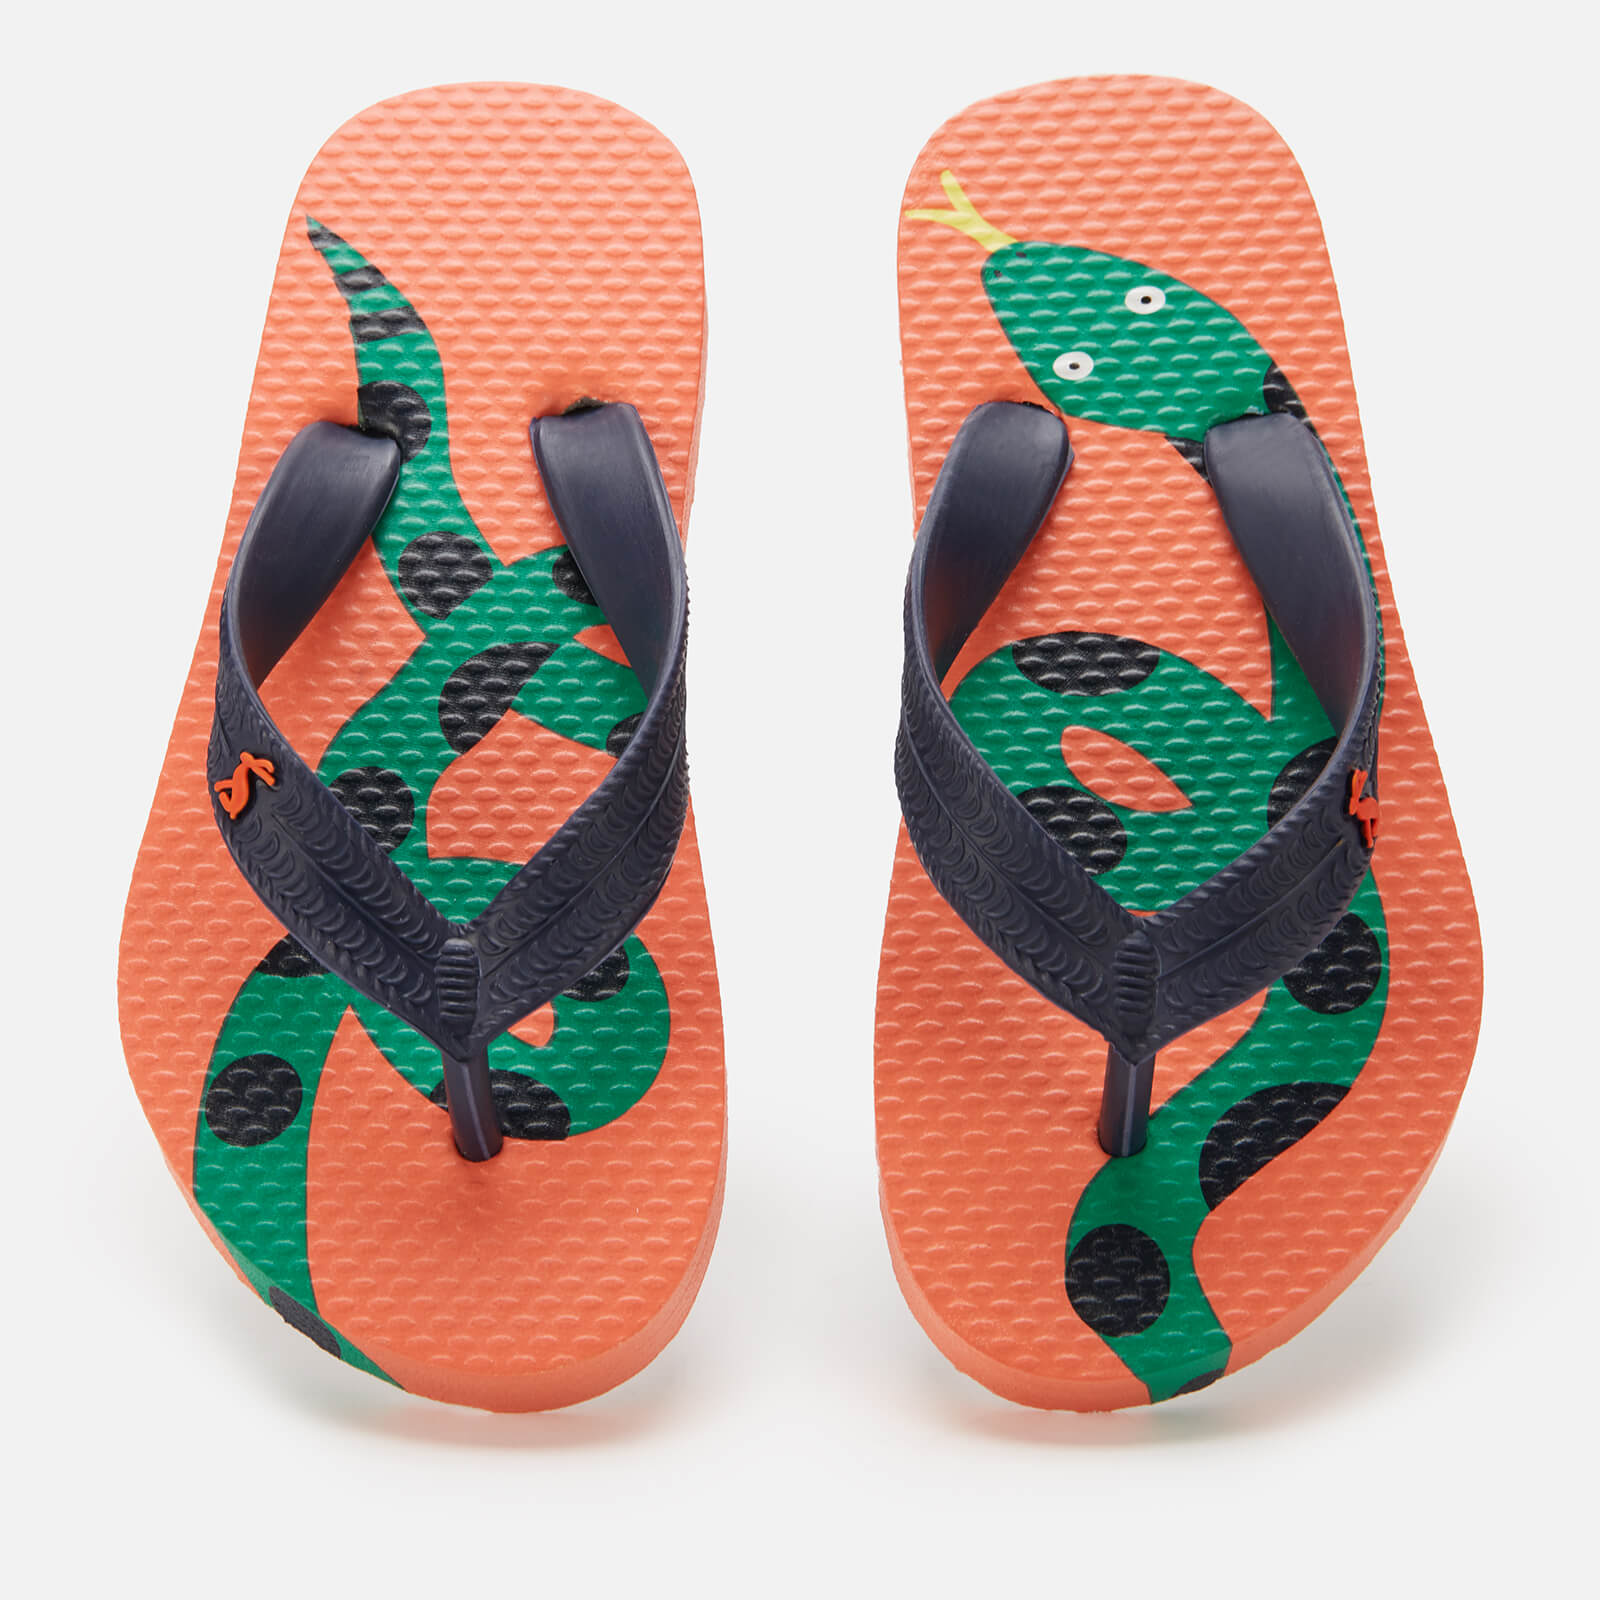 Joules Kids' Lightweight Summer Sandals - Orange Snake - UK 12 Kids